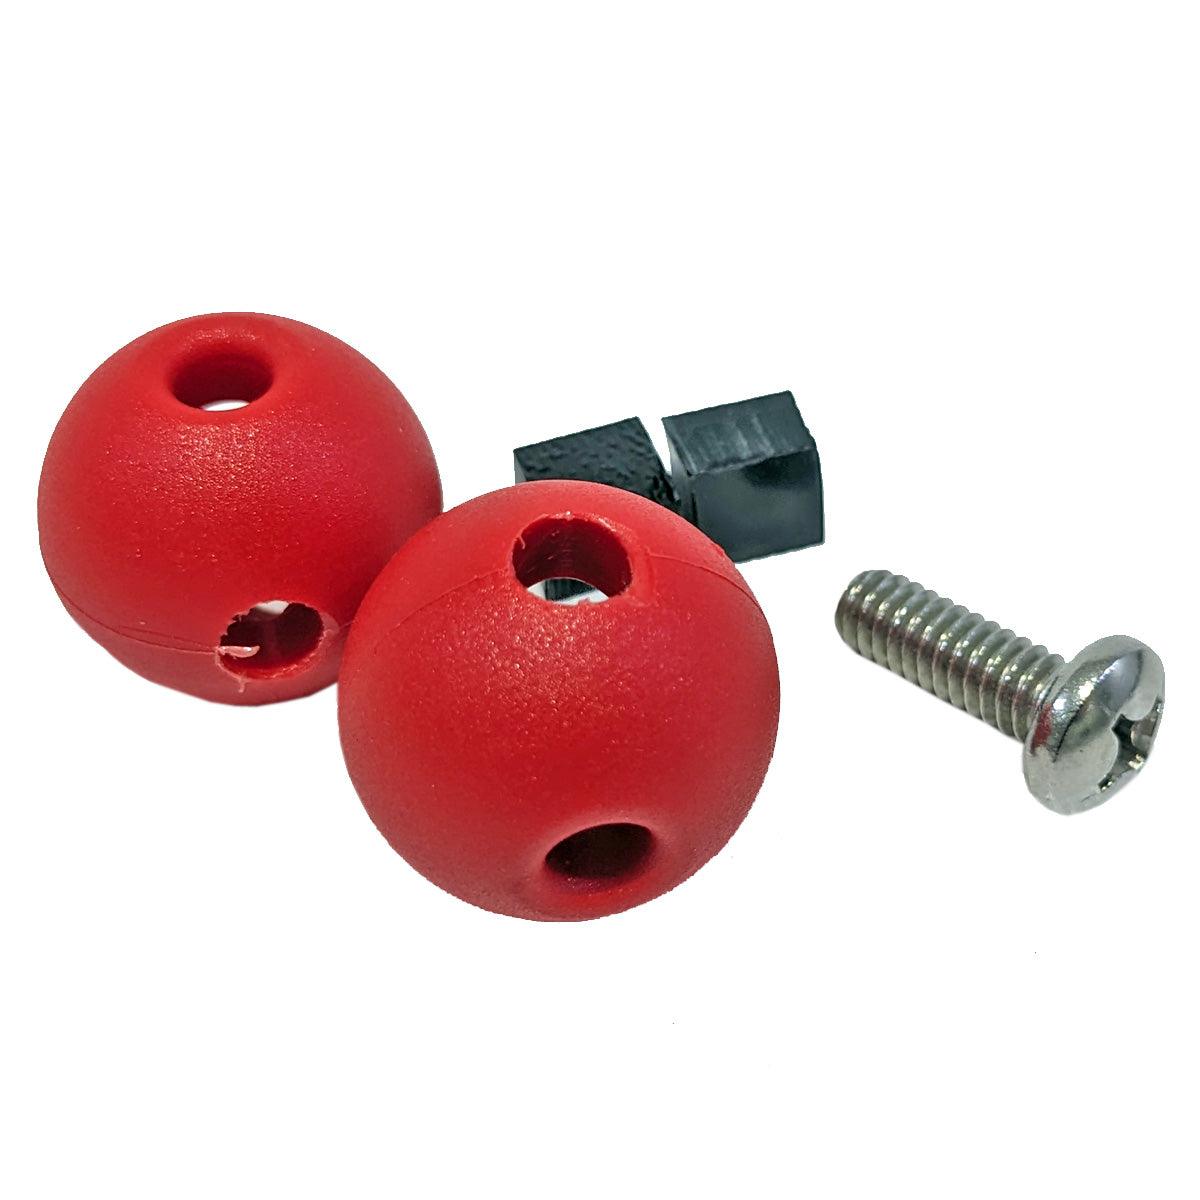 NSI Adjustable Stopperball - Kiteshop.com